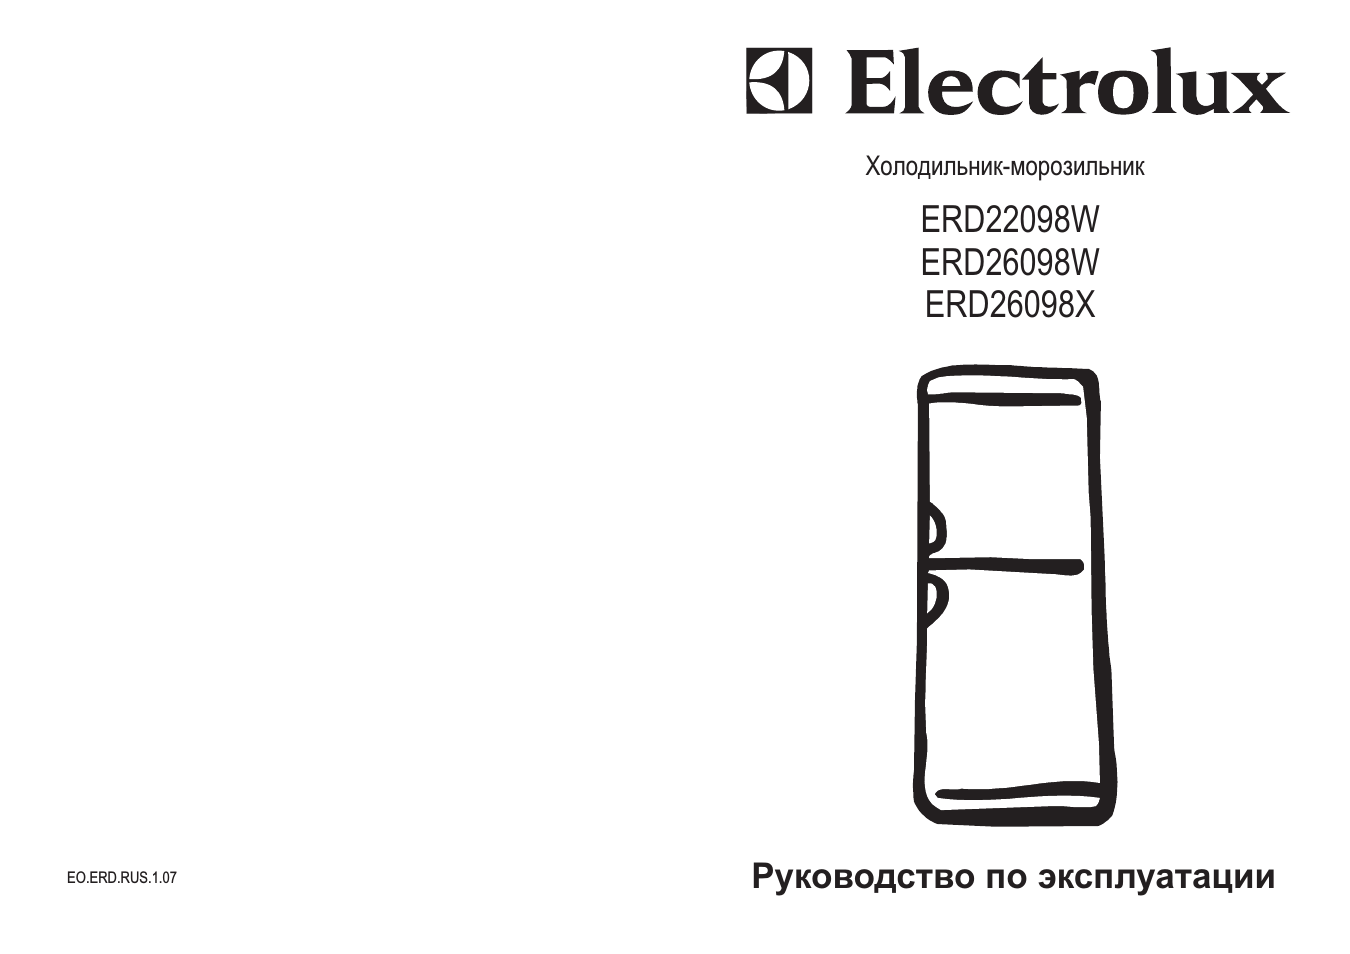 Инструкция по эксплуатации Electrolux ERD 26098 W  RU | 13 страниц